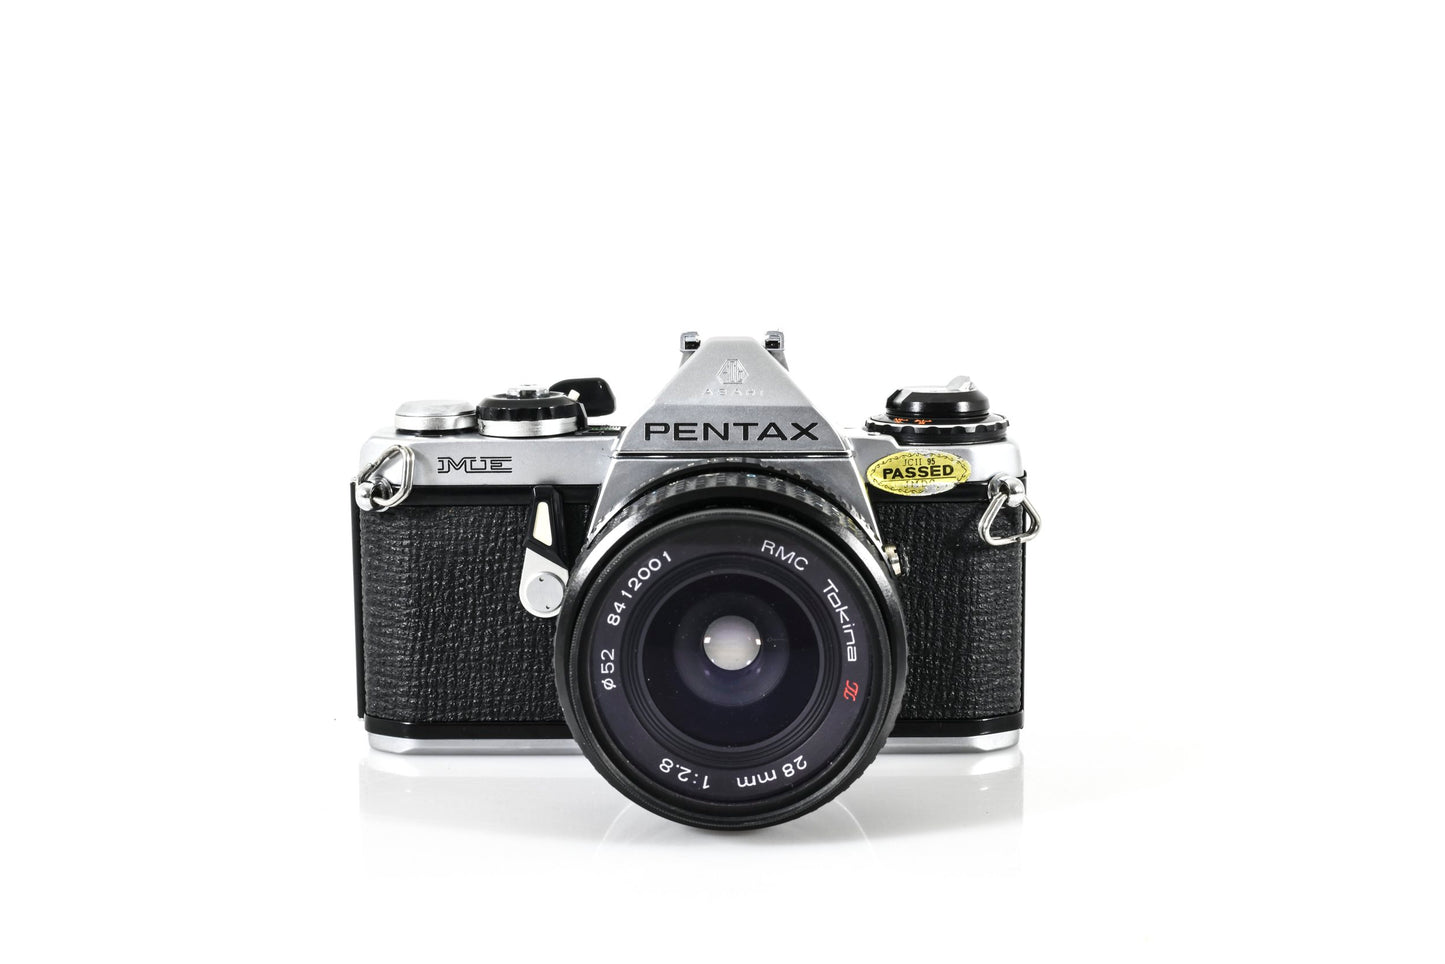 Asahi Pentax ME 35mm SLR Film Camera with 28mm RMC Tokina F2.8 Lens